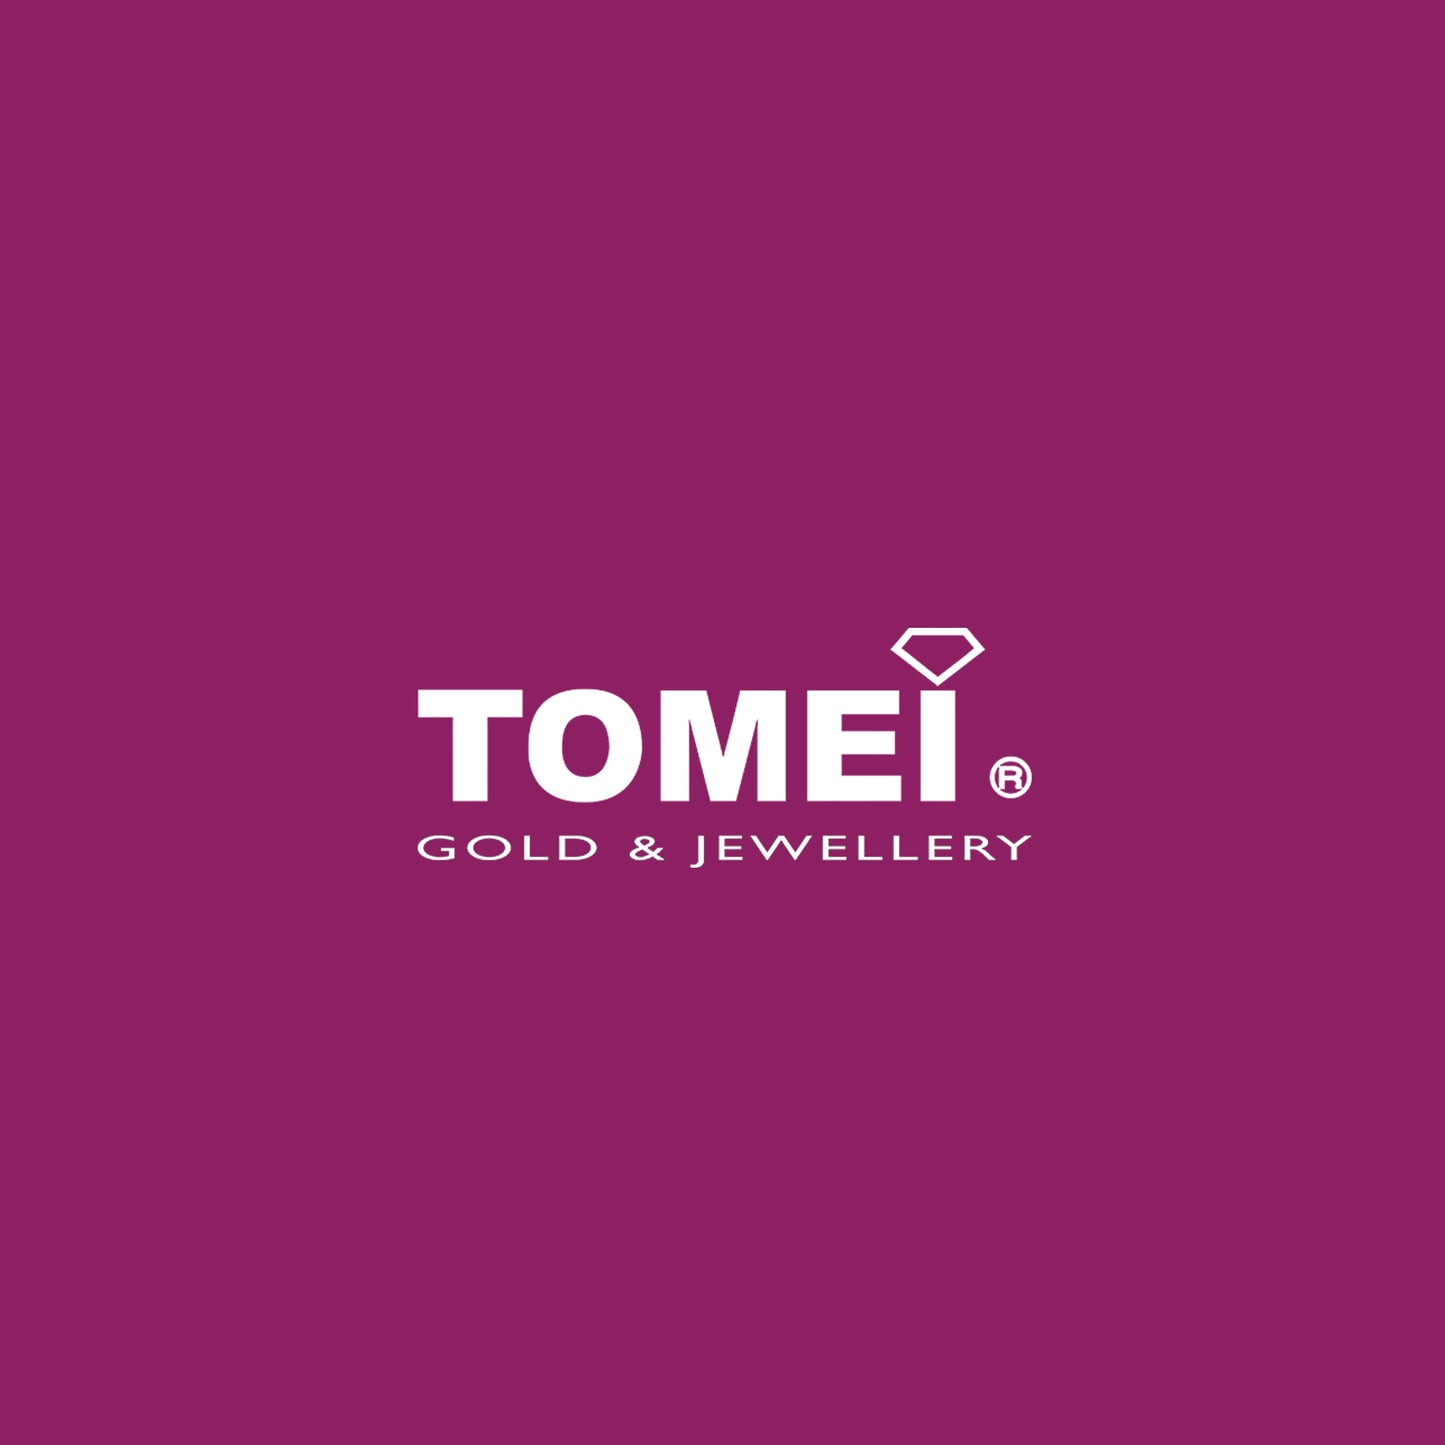 Tomei Caparisoned in Bonny Spheres Bracelet, Yellow Gold 916